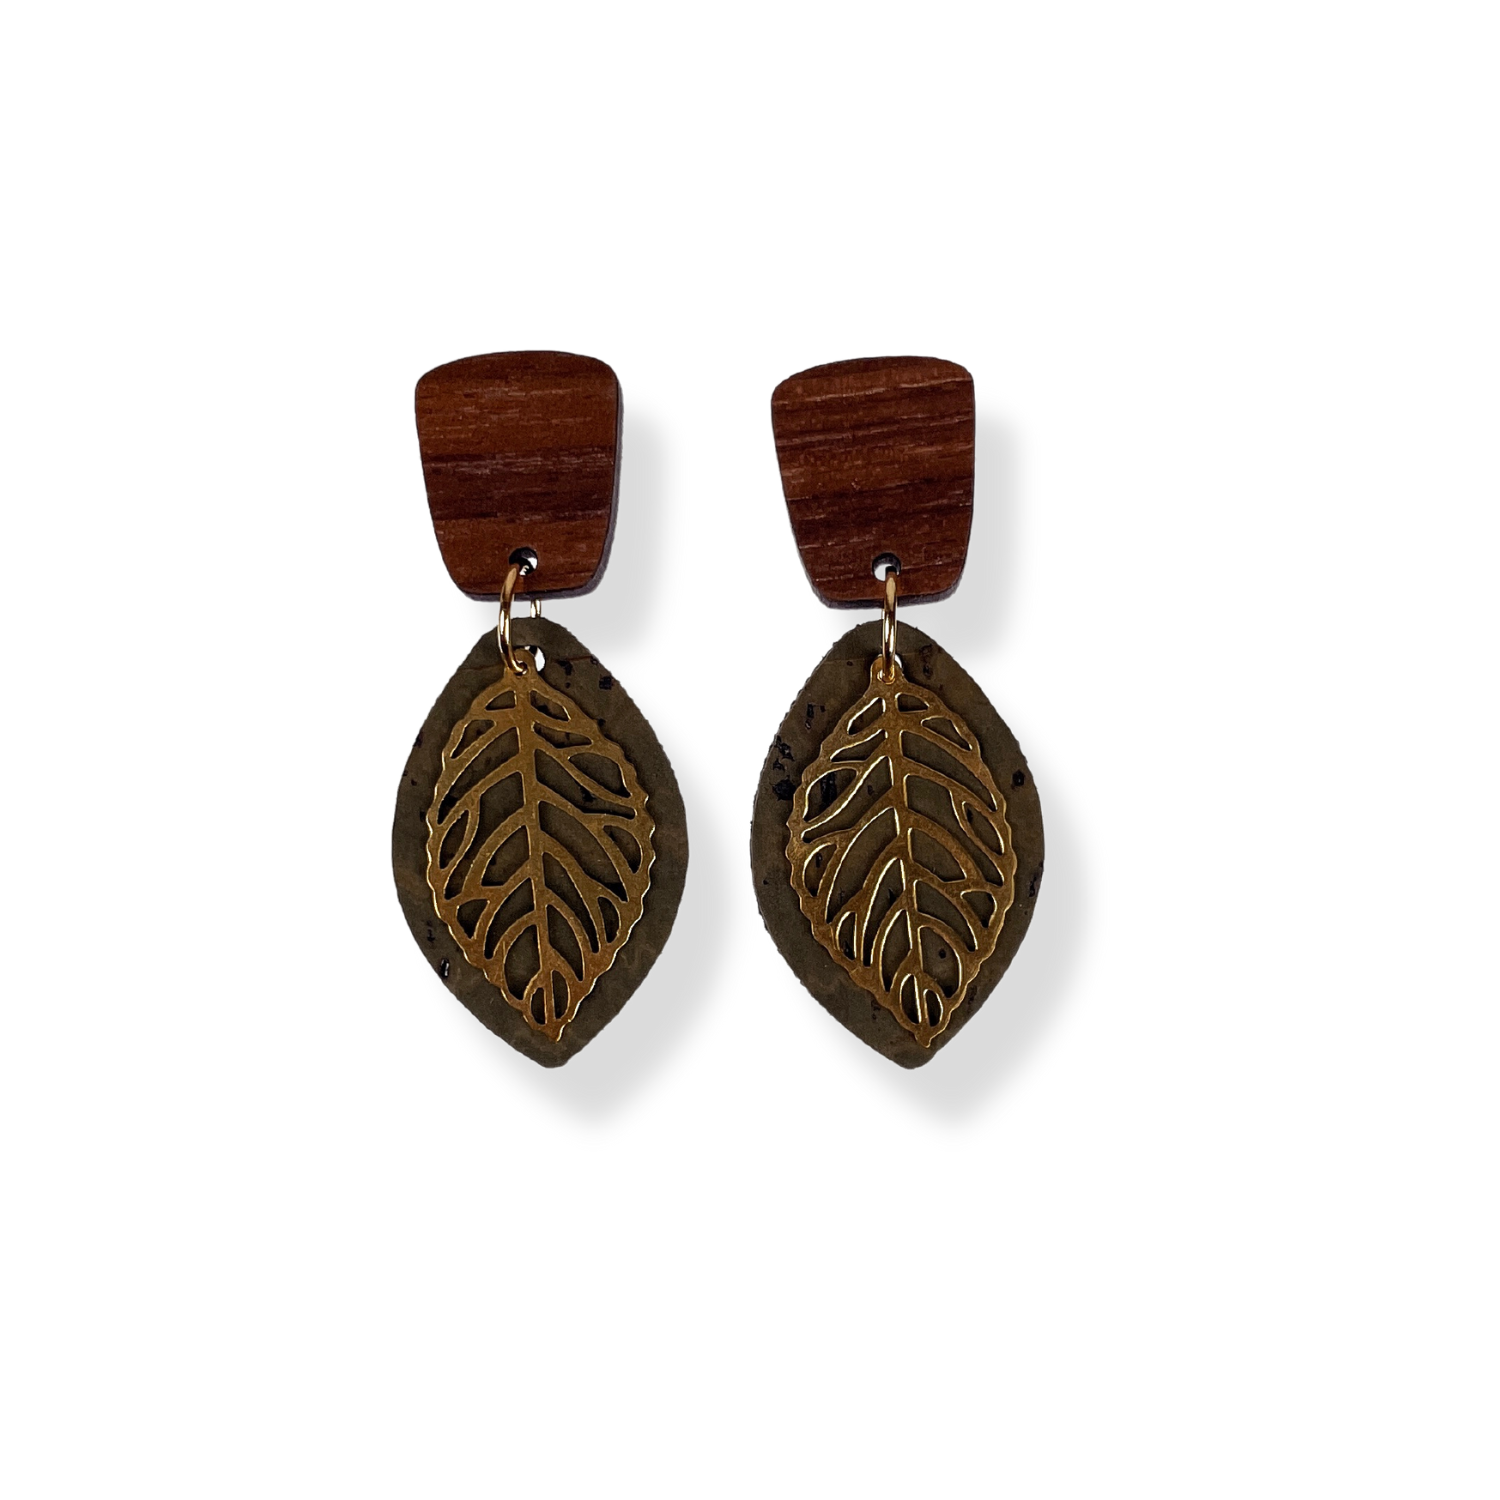 Aspen Walnut Wood and Cork Earrings- Olive